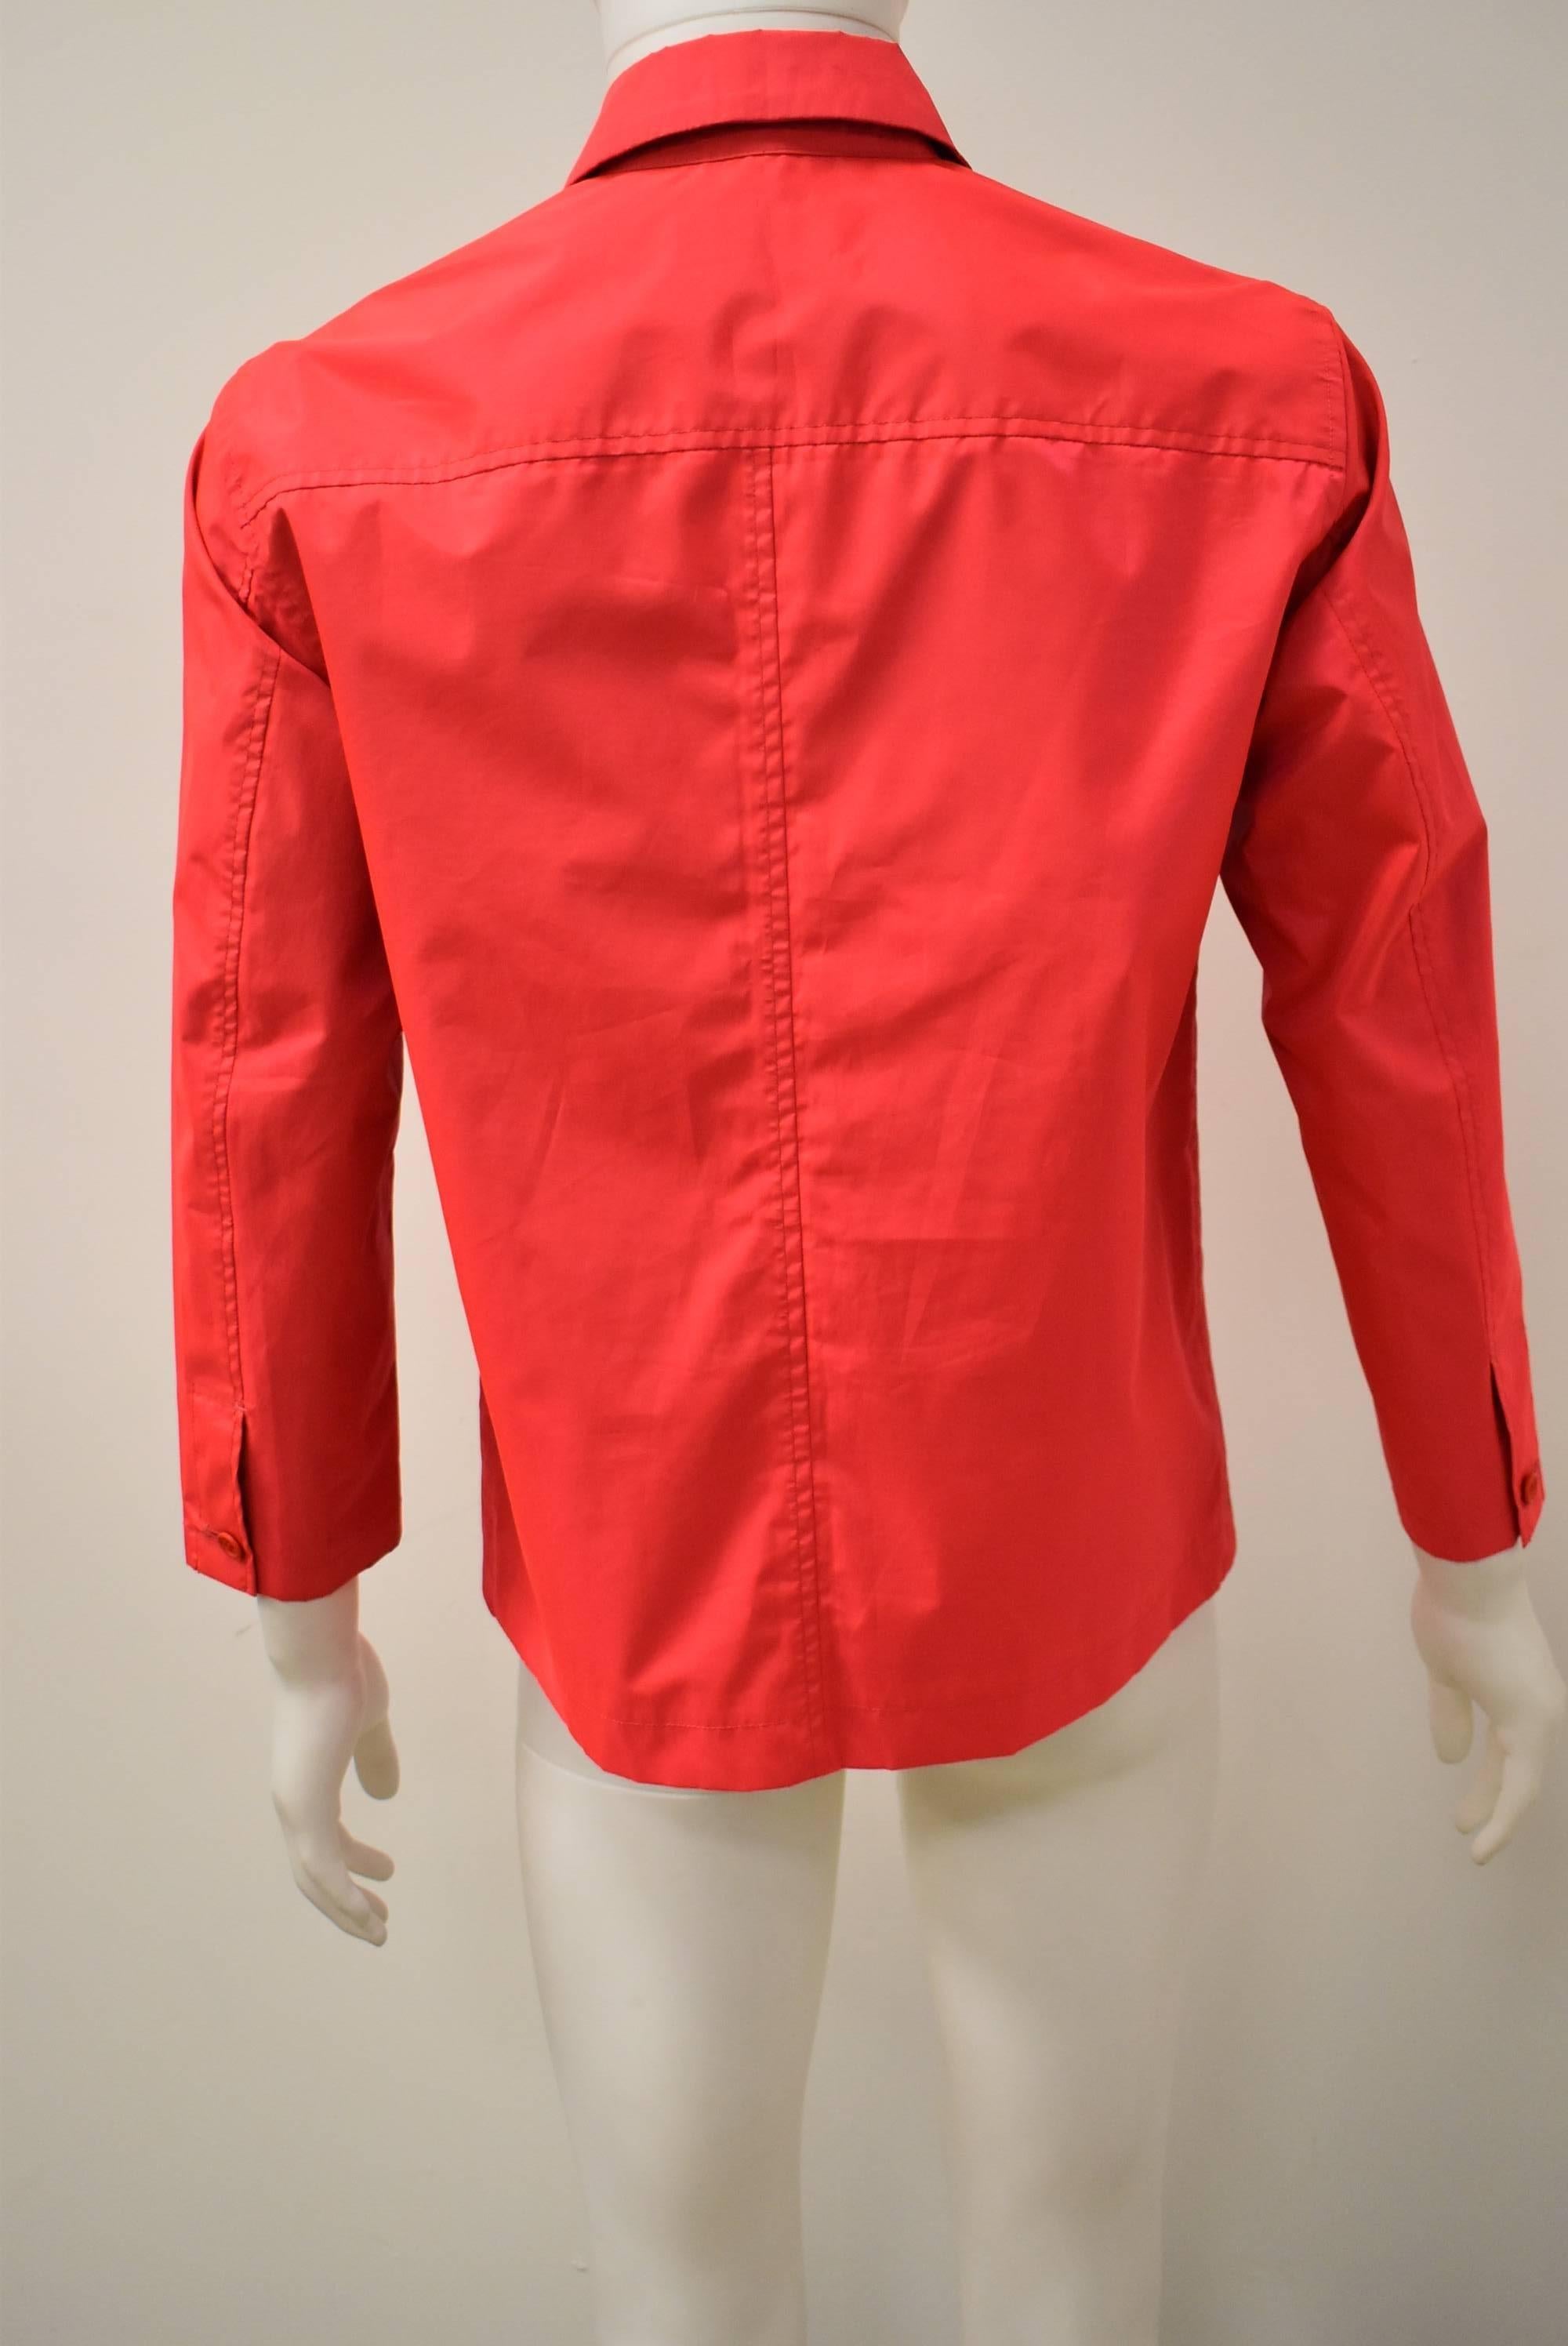 Women's or Men's Issey Miyake Uni-sex Neon Red Jacket 